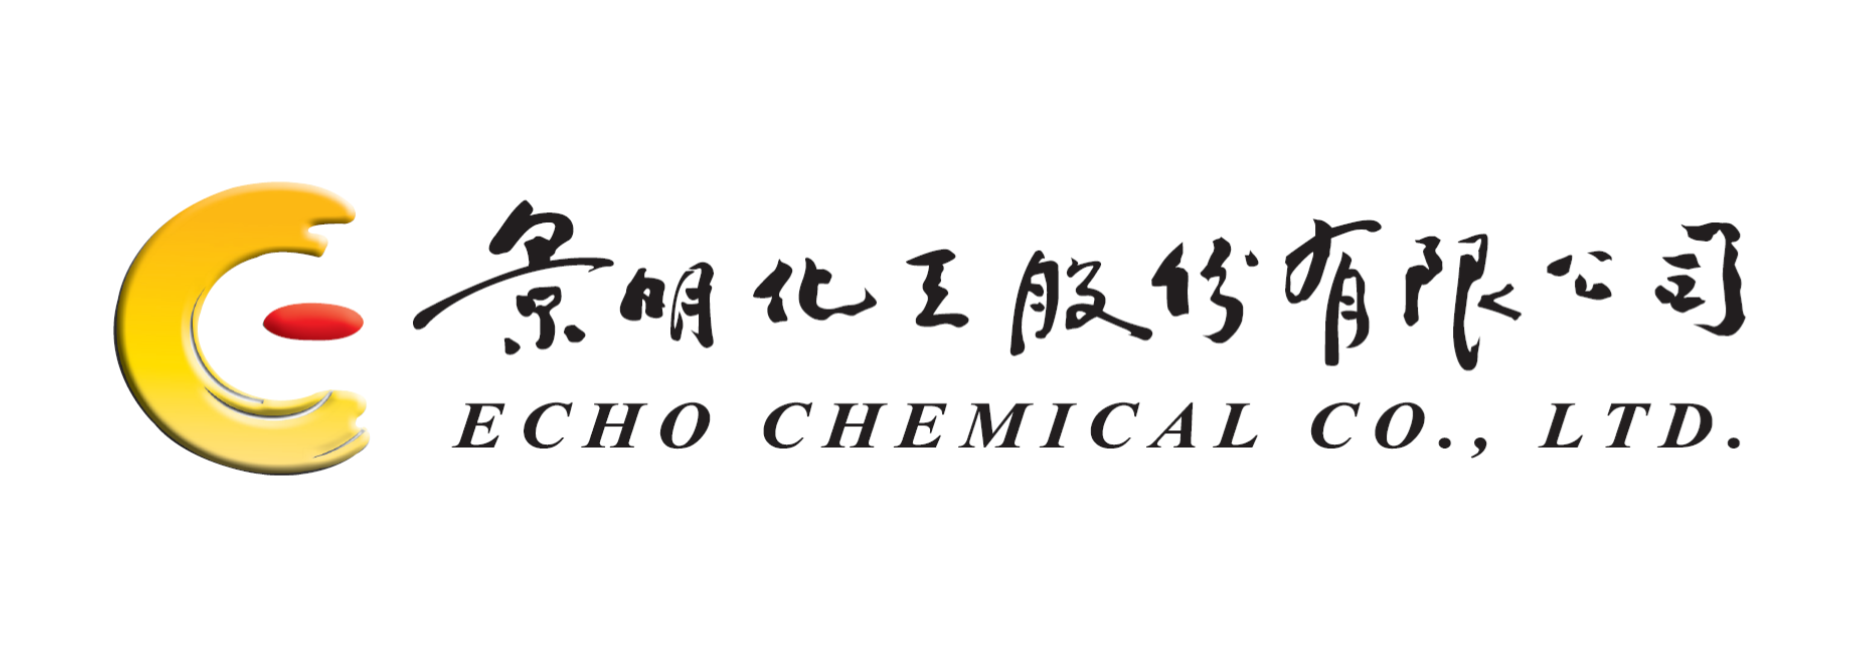 Echo Chemical